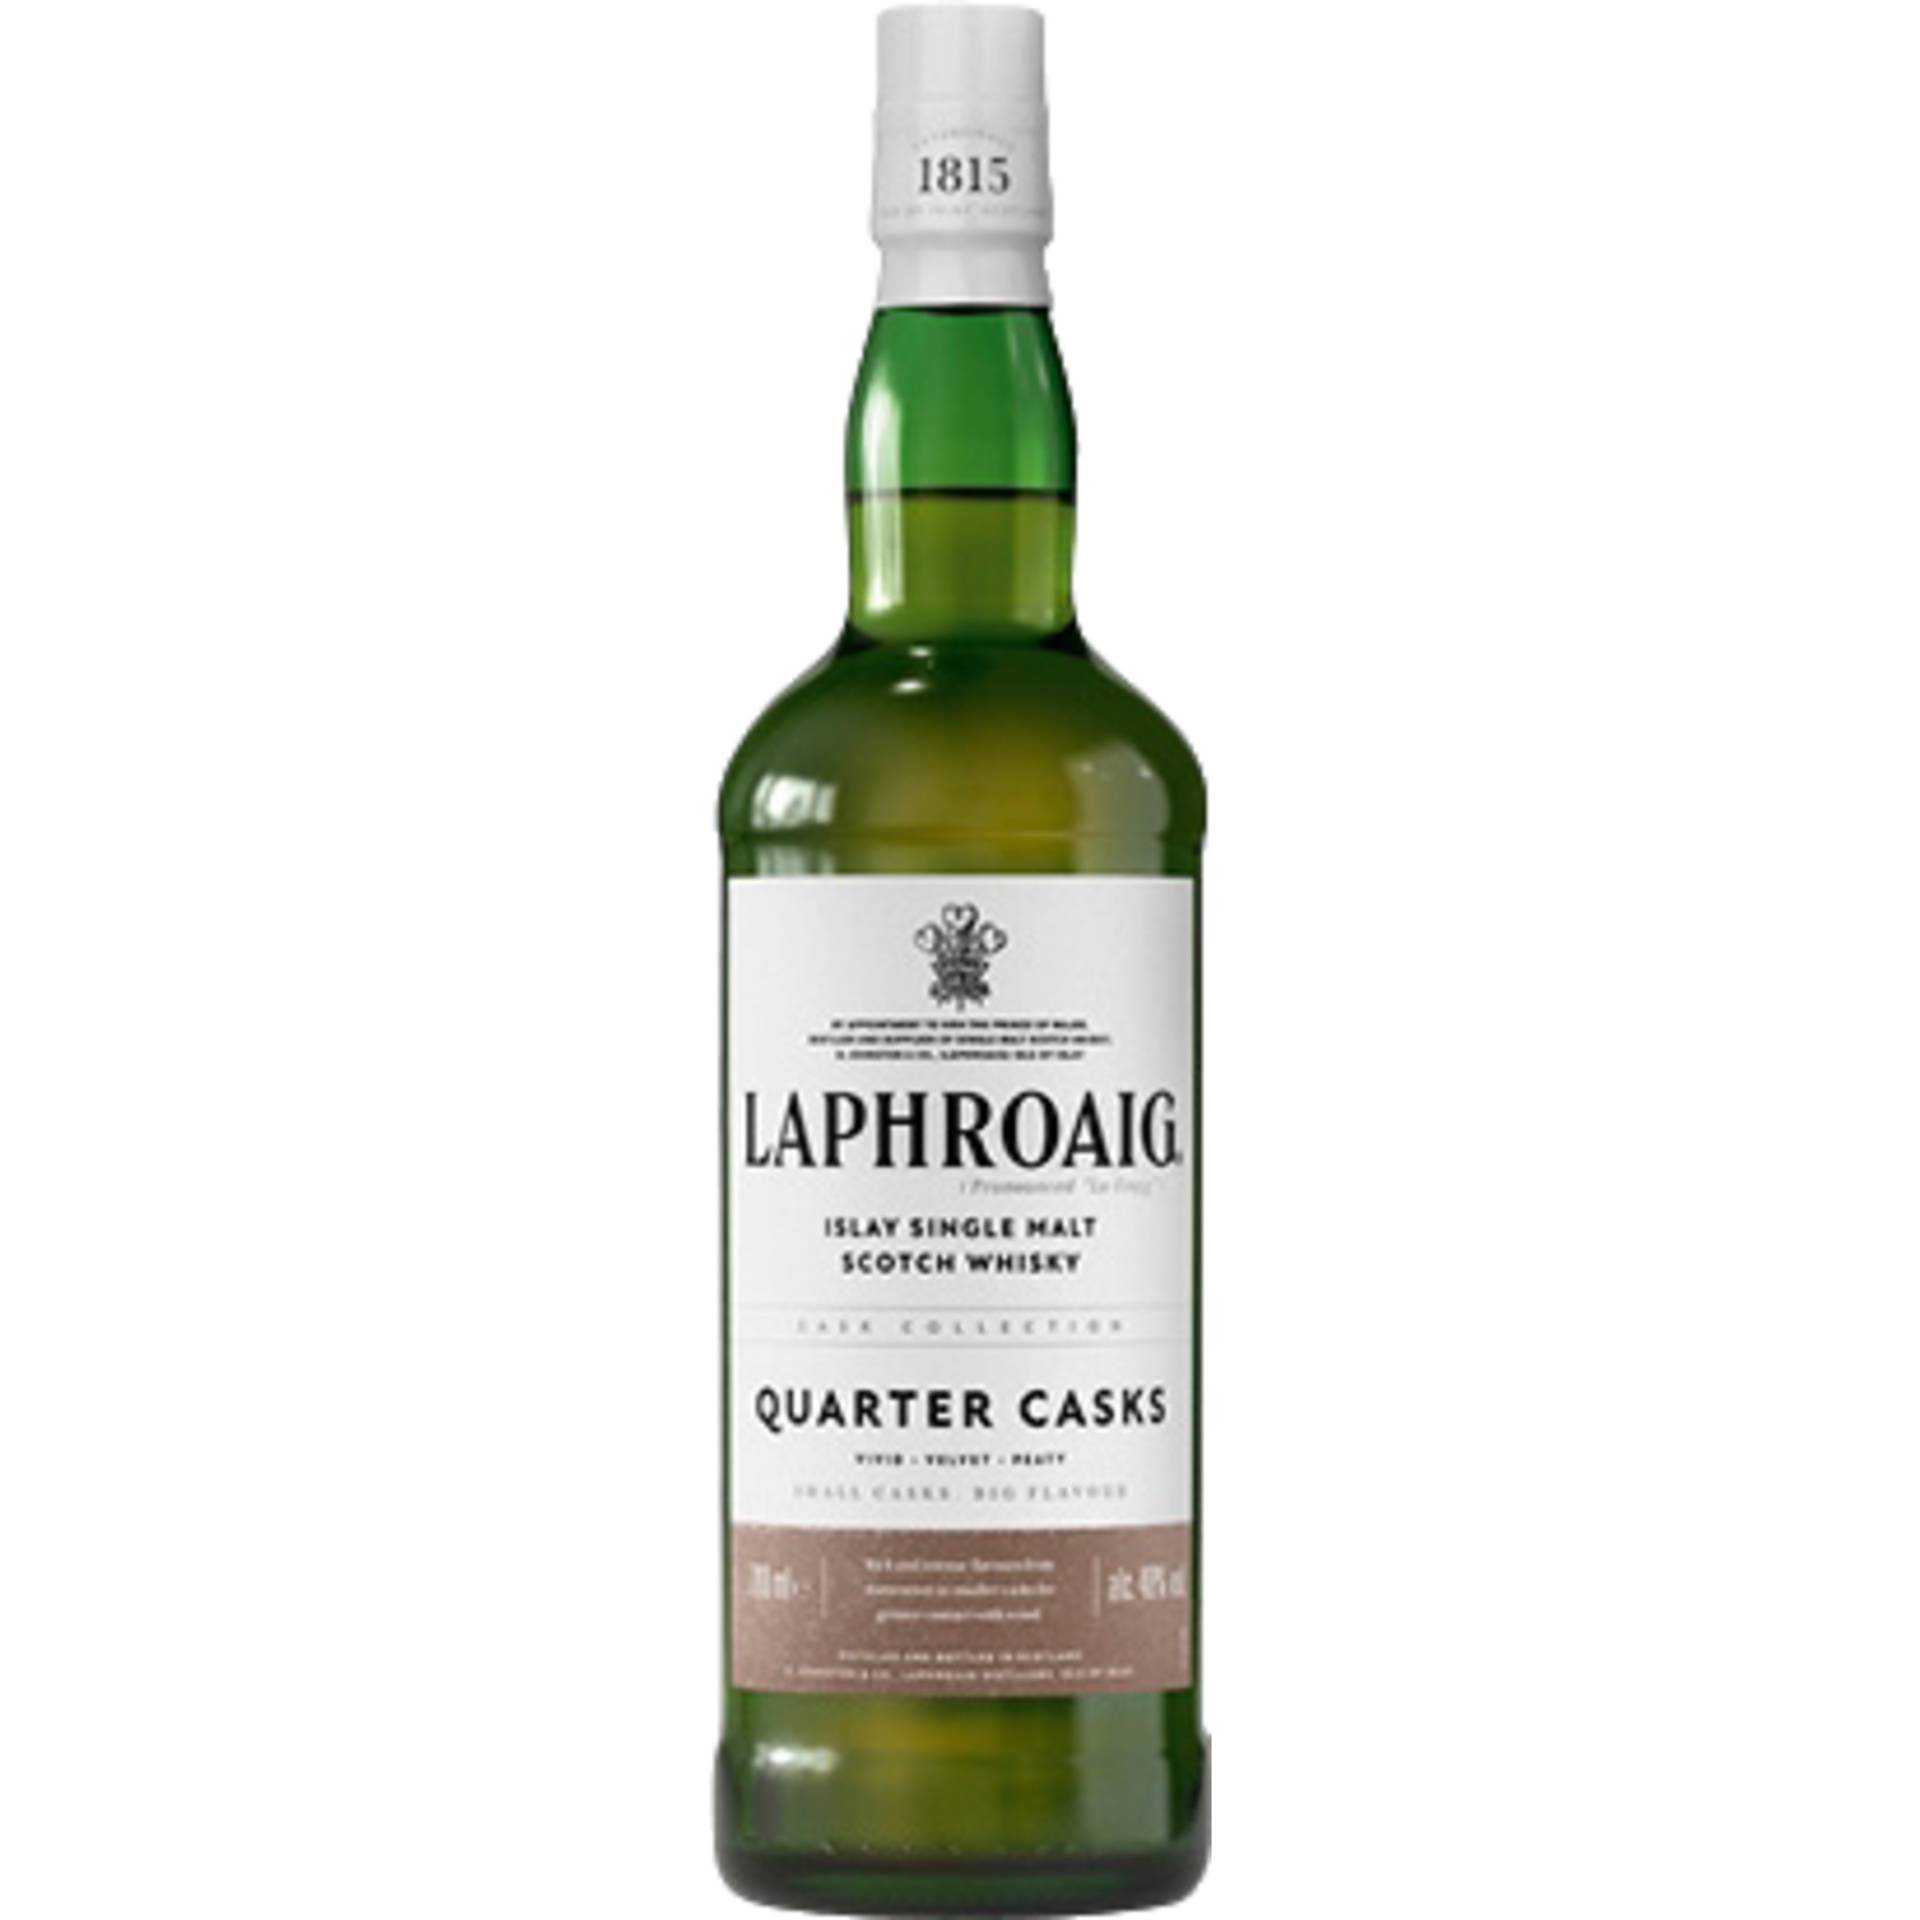 Laphroaig Quarter Cask Single Malt Scotch Whisky, 48 % vol. 0,7 L, Schottland, Spirituosen von D. Johnston & Company (Laphroaig) Ltd, Springburn Bond, Carlisle St, Glasgow G21 1EQ, Scotland